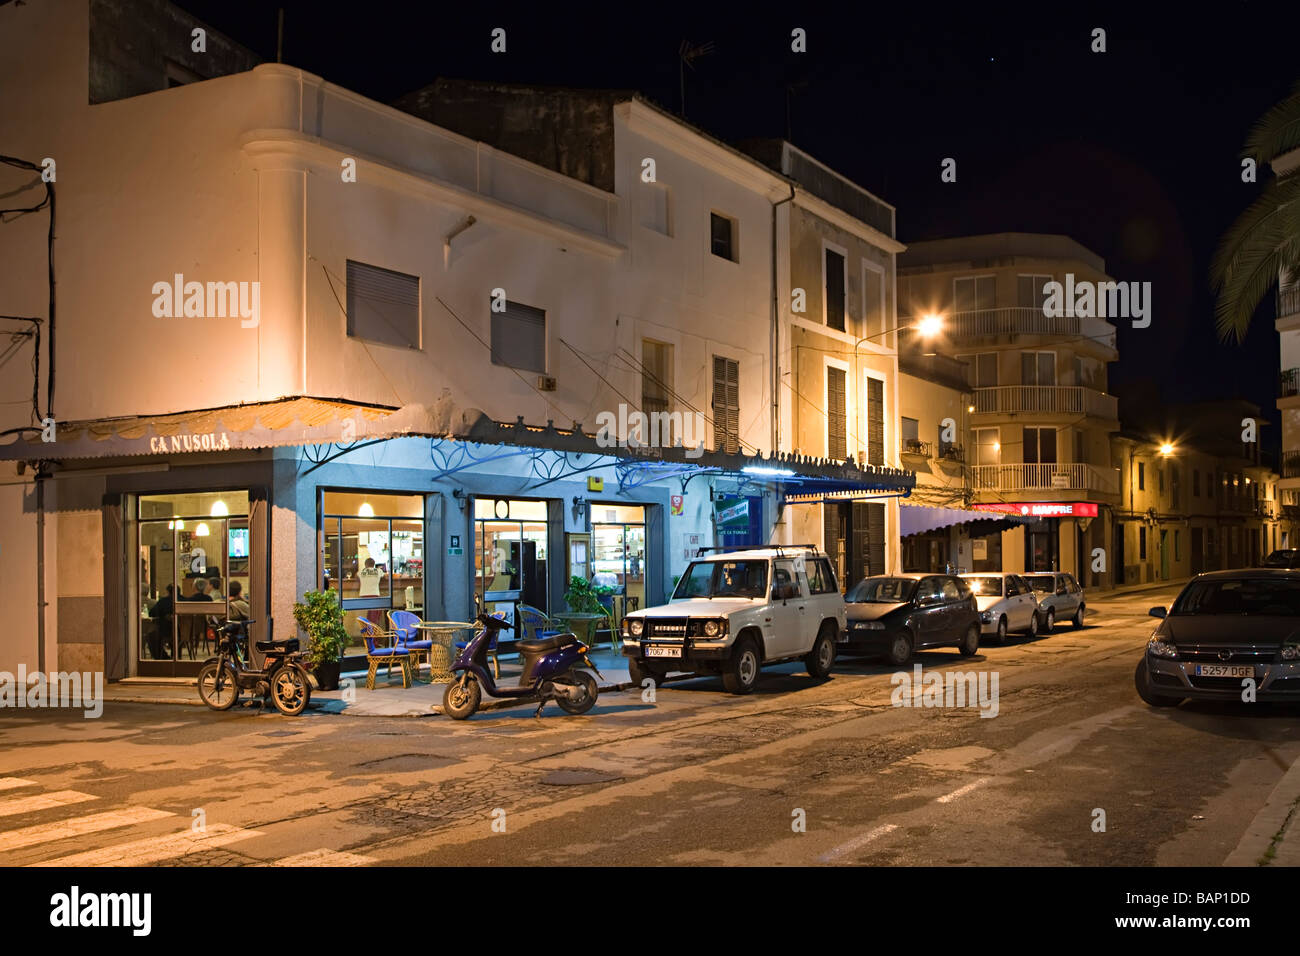 La rue vide la nuit avec des gens en bar Felanitx, Majorque Espagne Banque D'Images